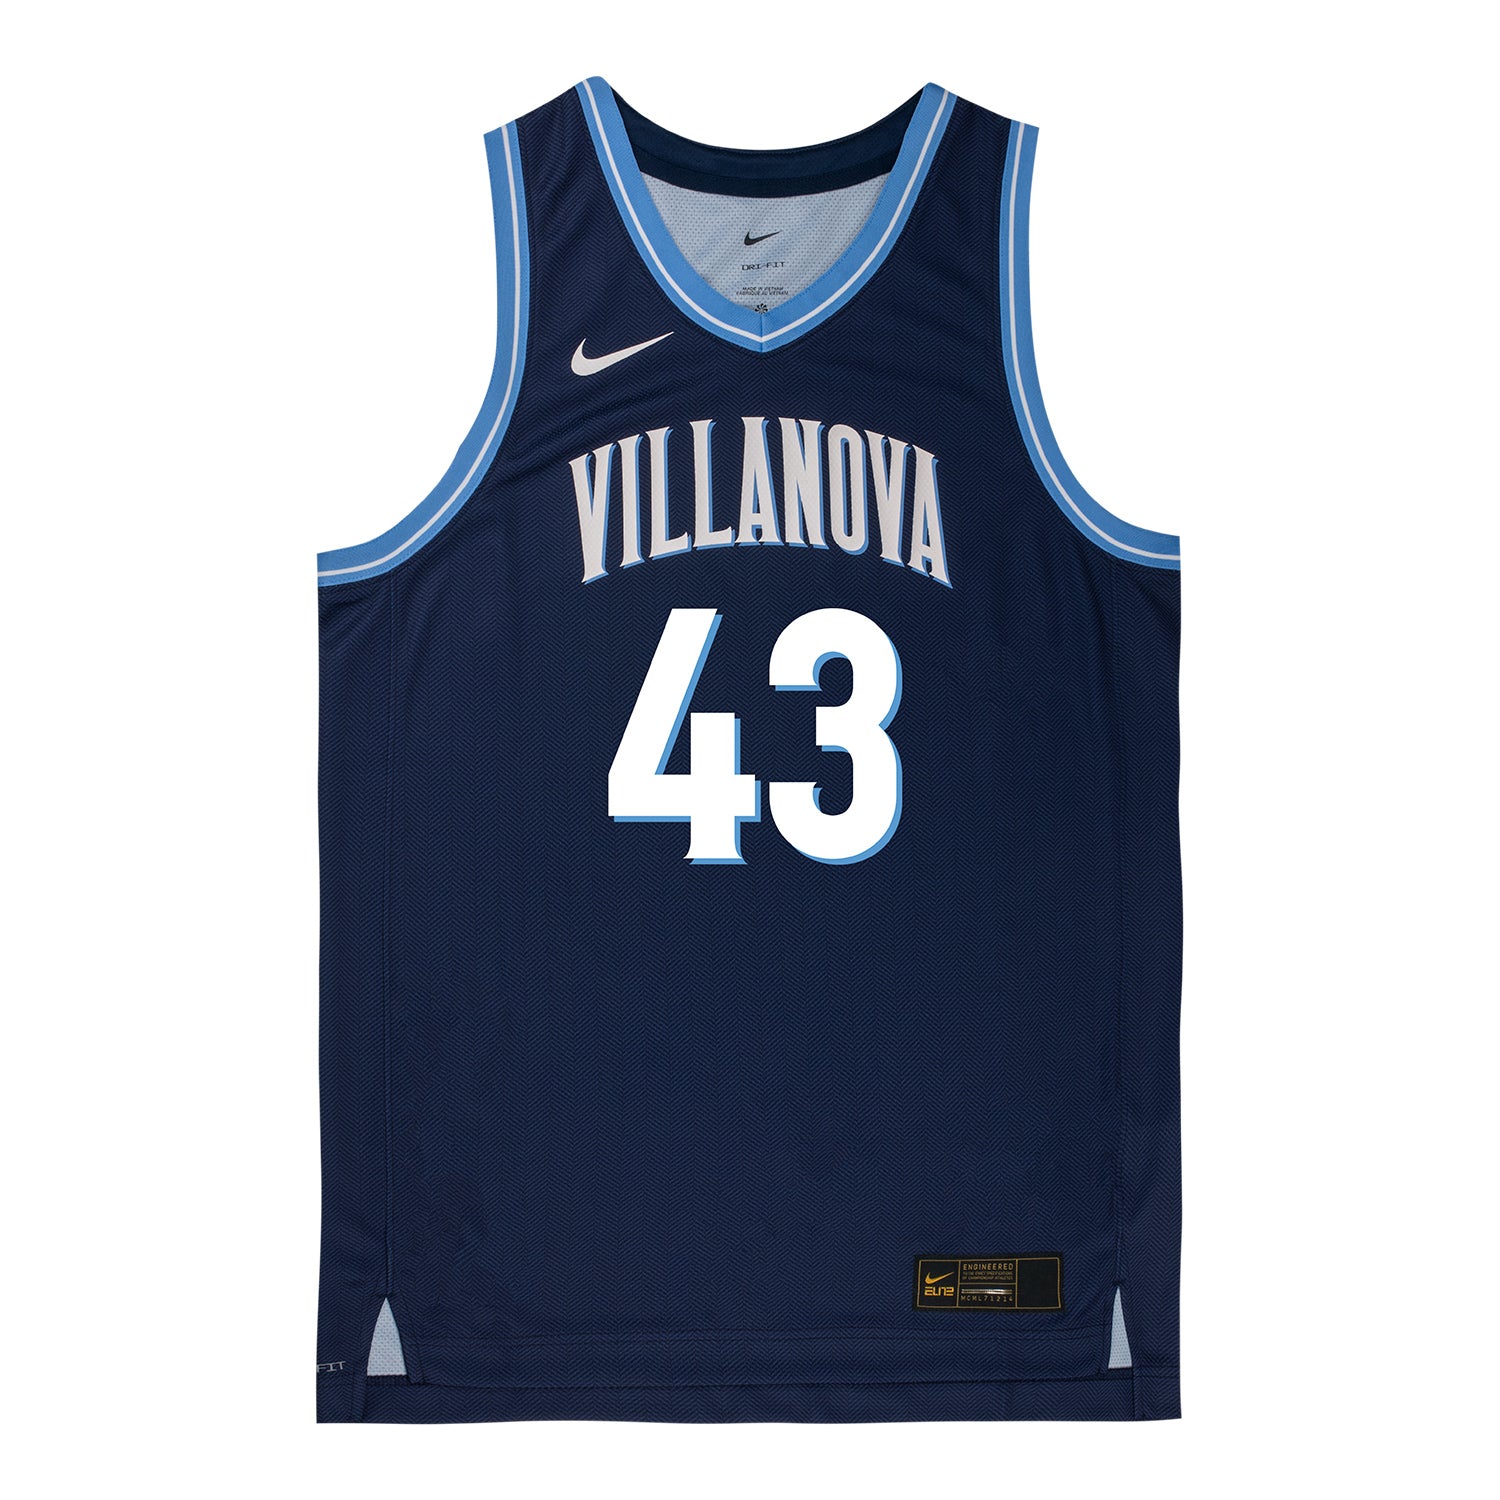 Villanova Wildcats kids jersey